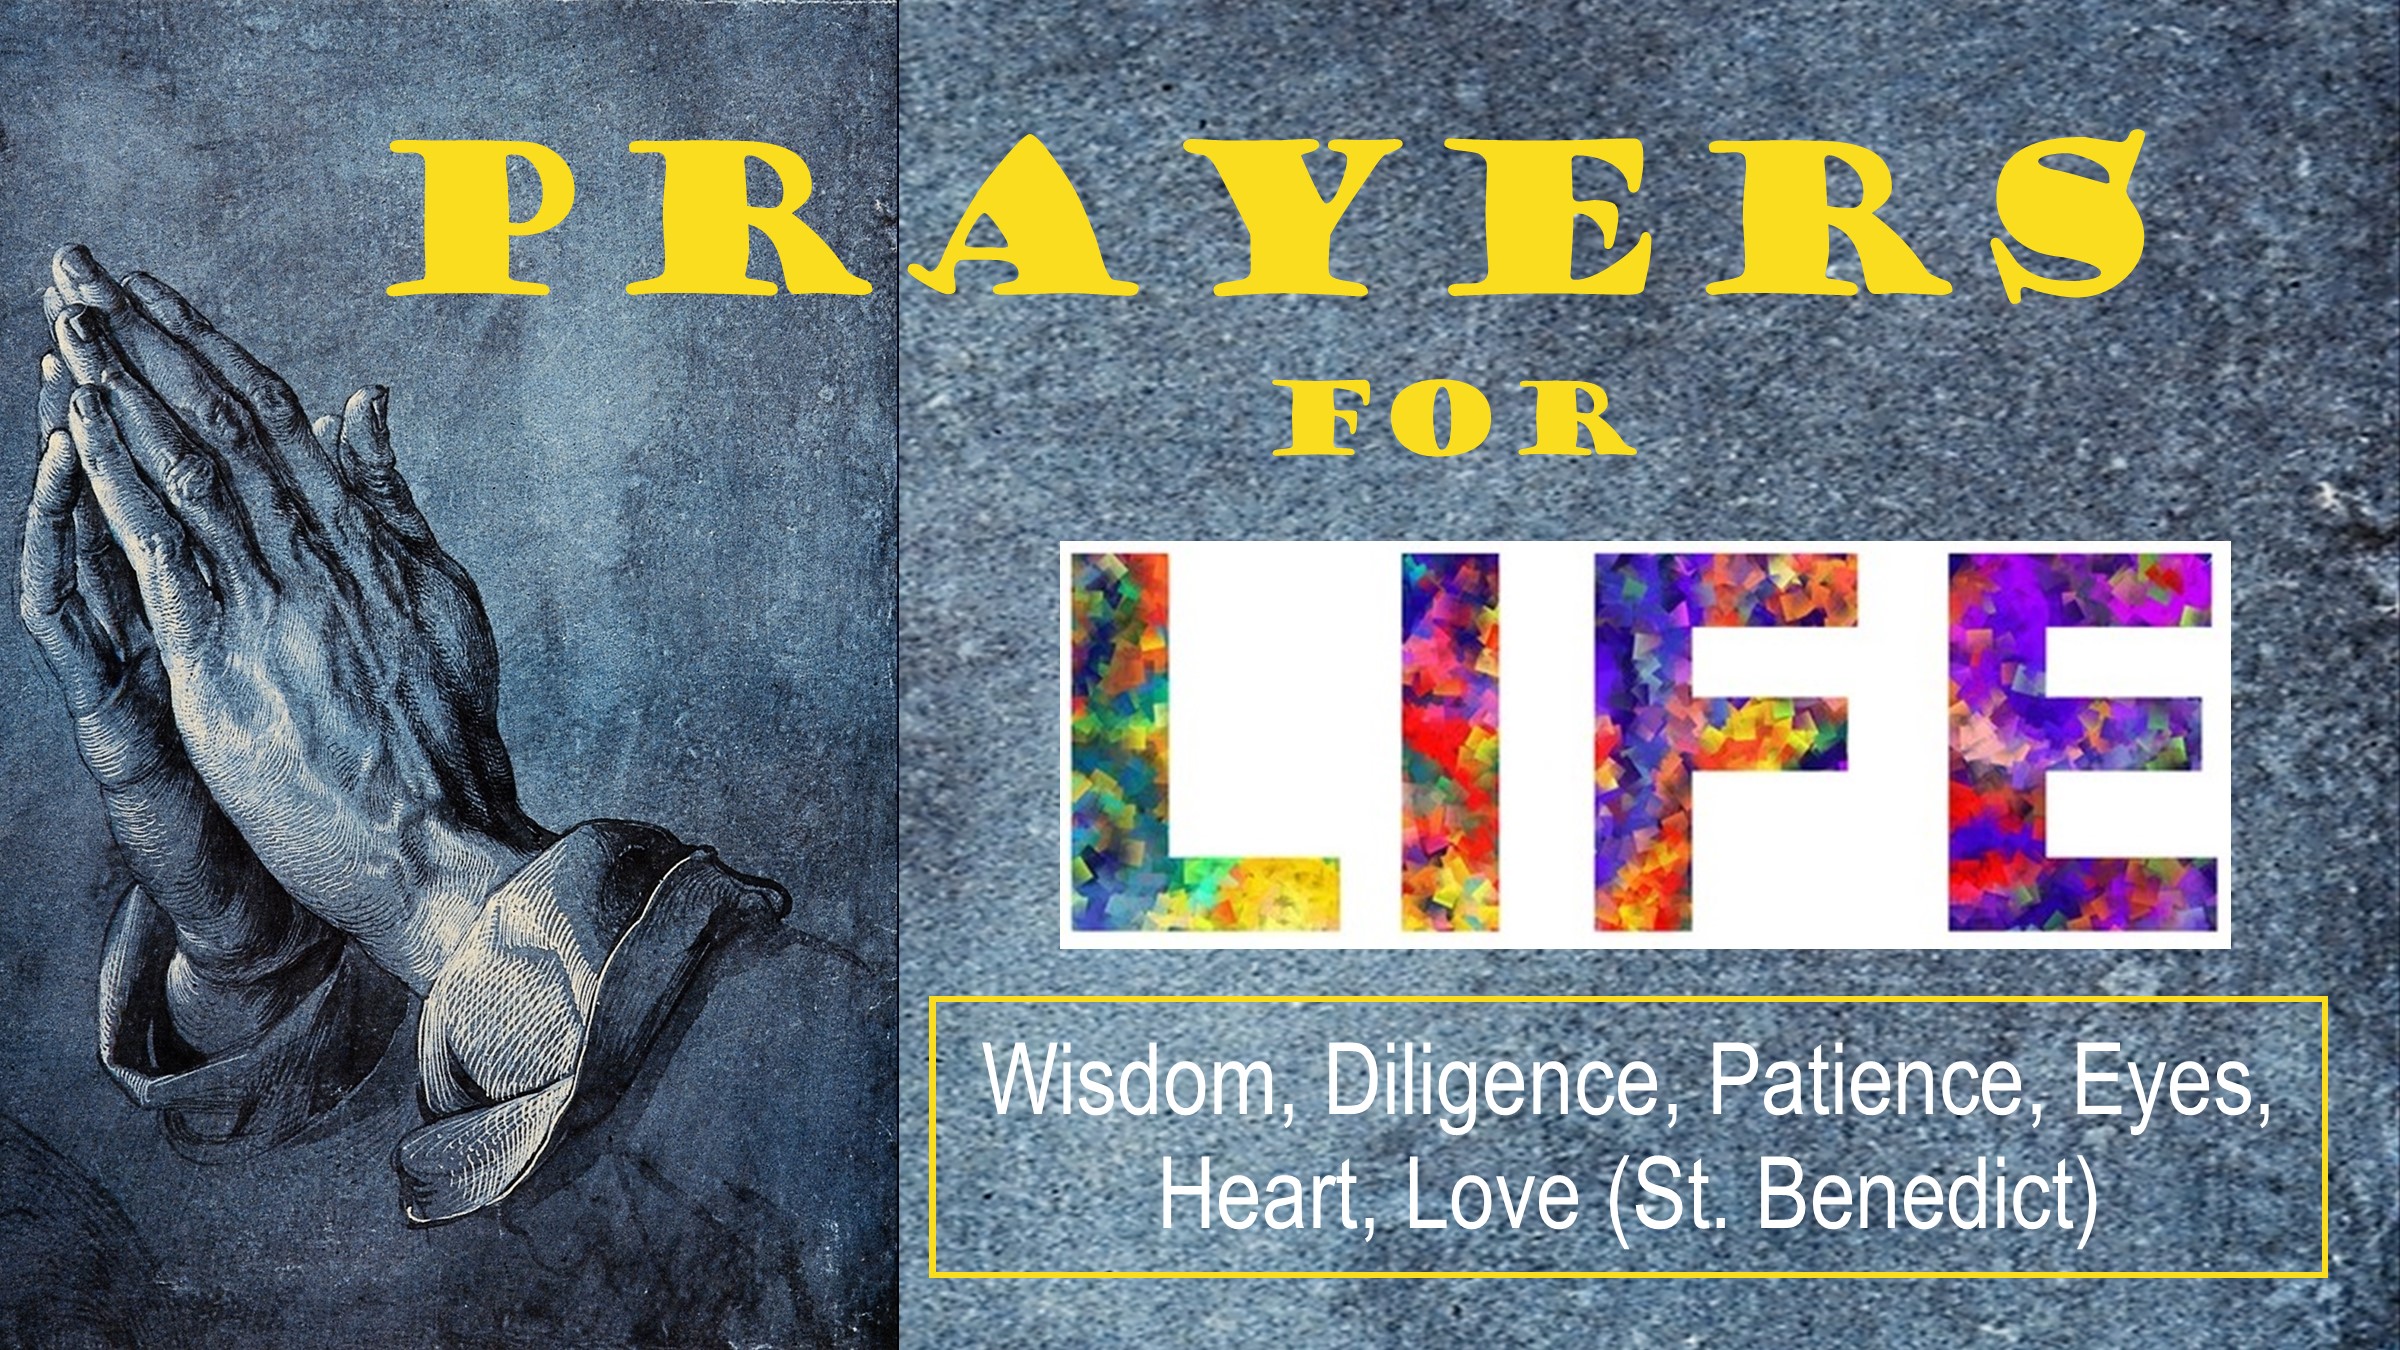 Wisdom, Diligence, Patience, Eyes, Heart, Love (St. Benedict)